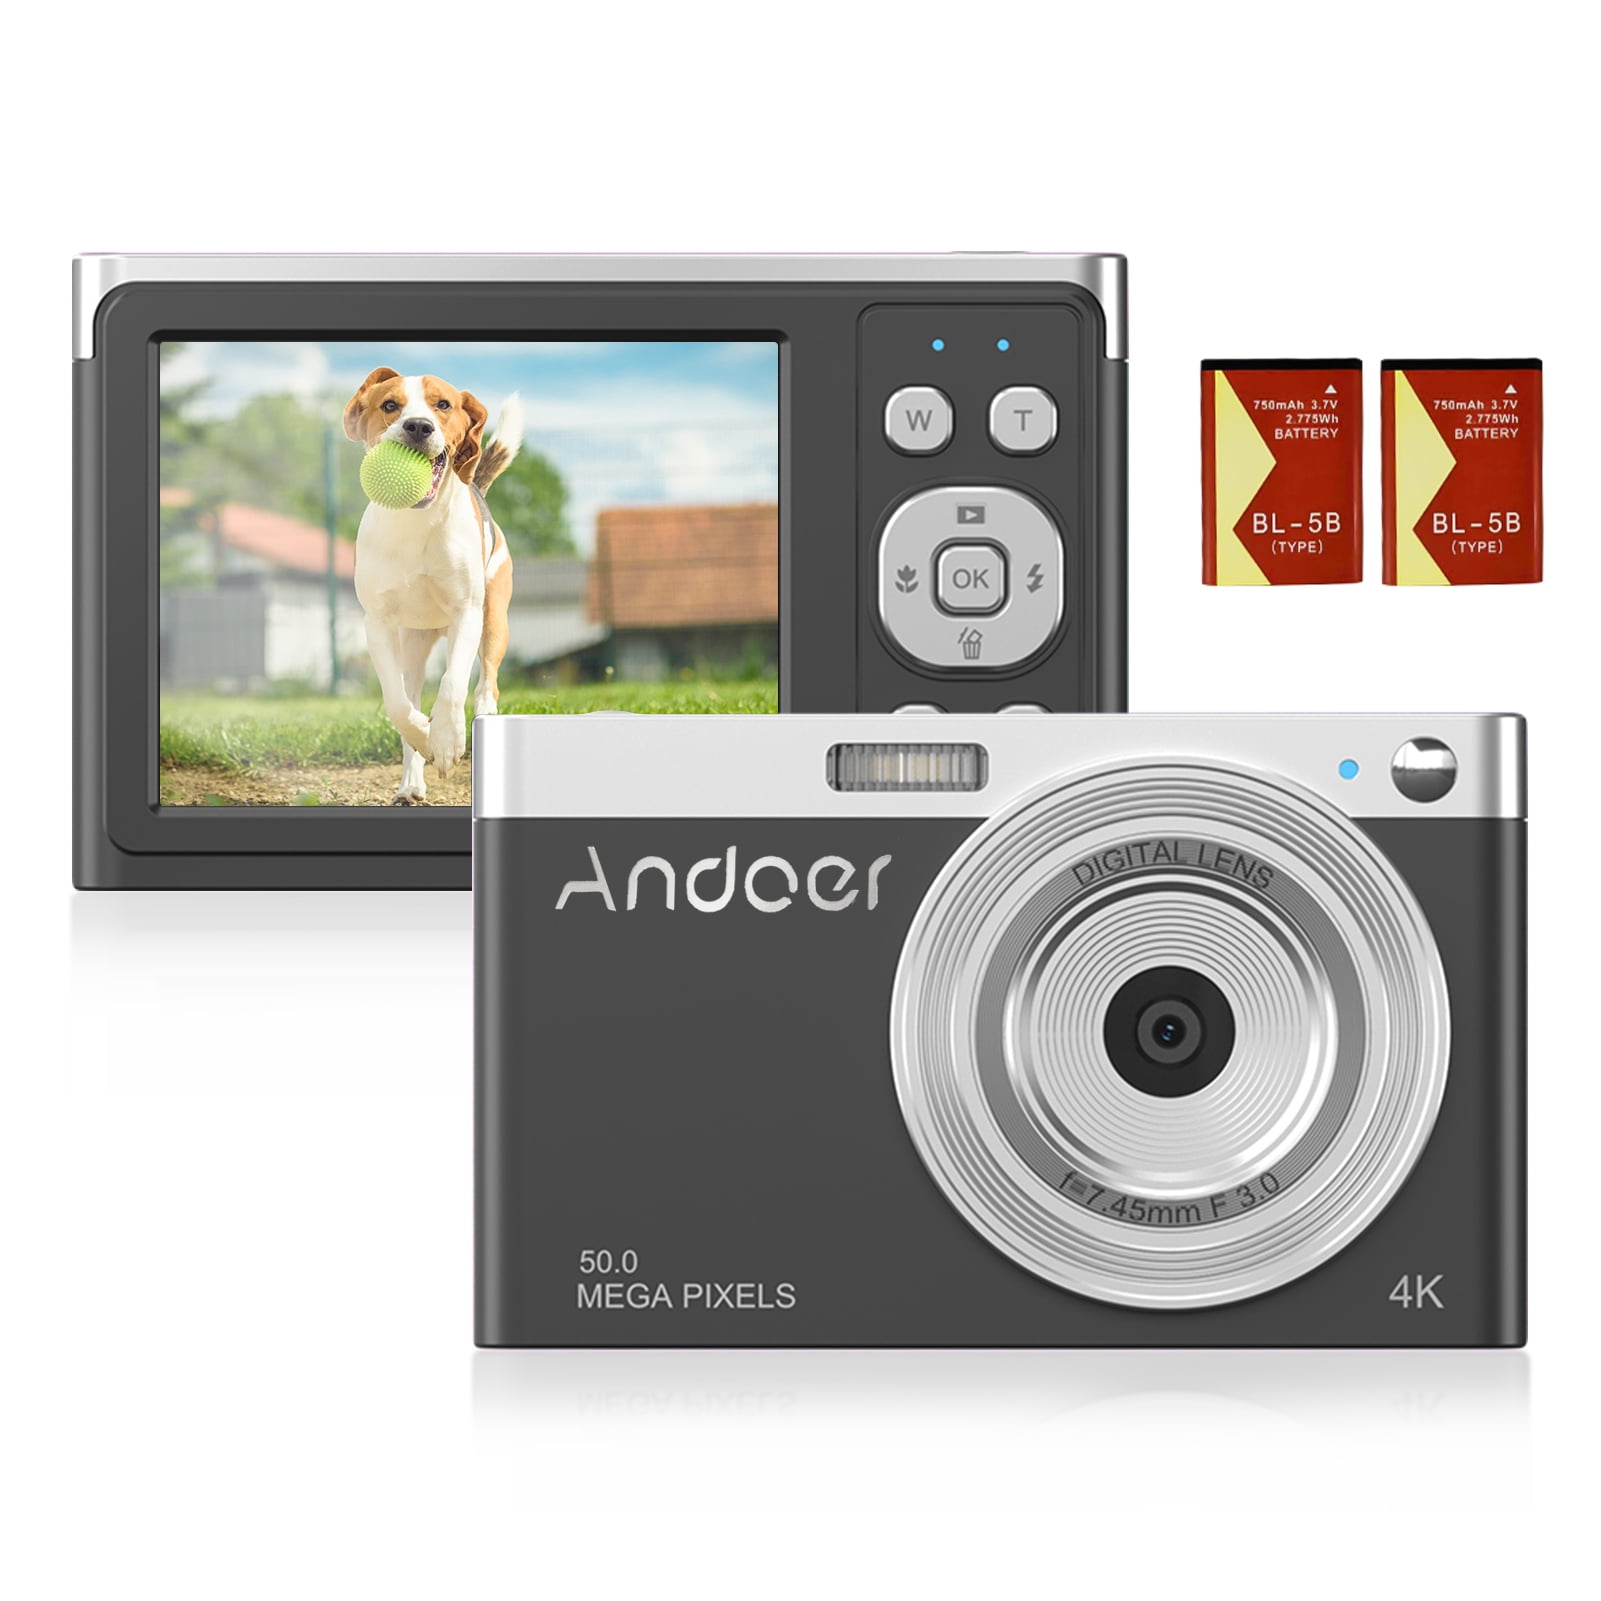 Buy VAFOTON 4K Video Camera Camcorder with Microphone, 48MP